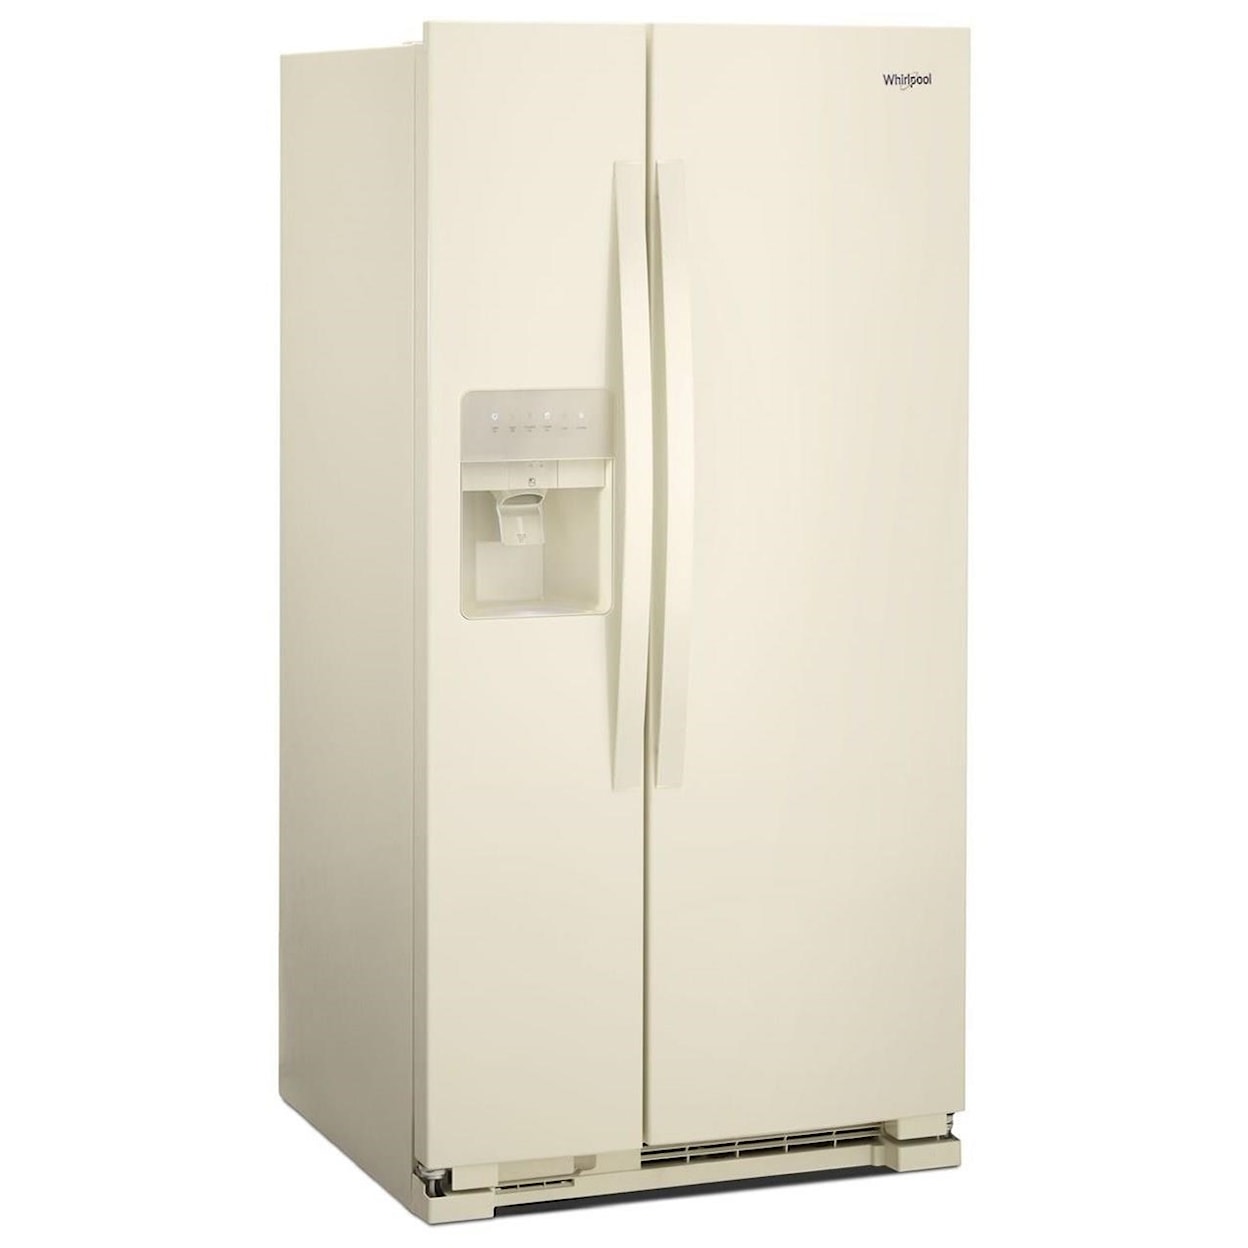 Whirlpool Side-By-Side Refrigerators 33" Wide Side-by-Side Refrigerator